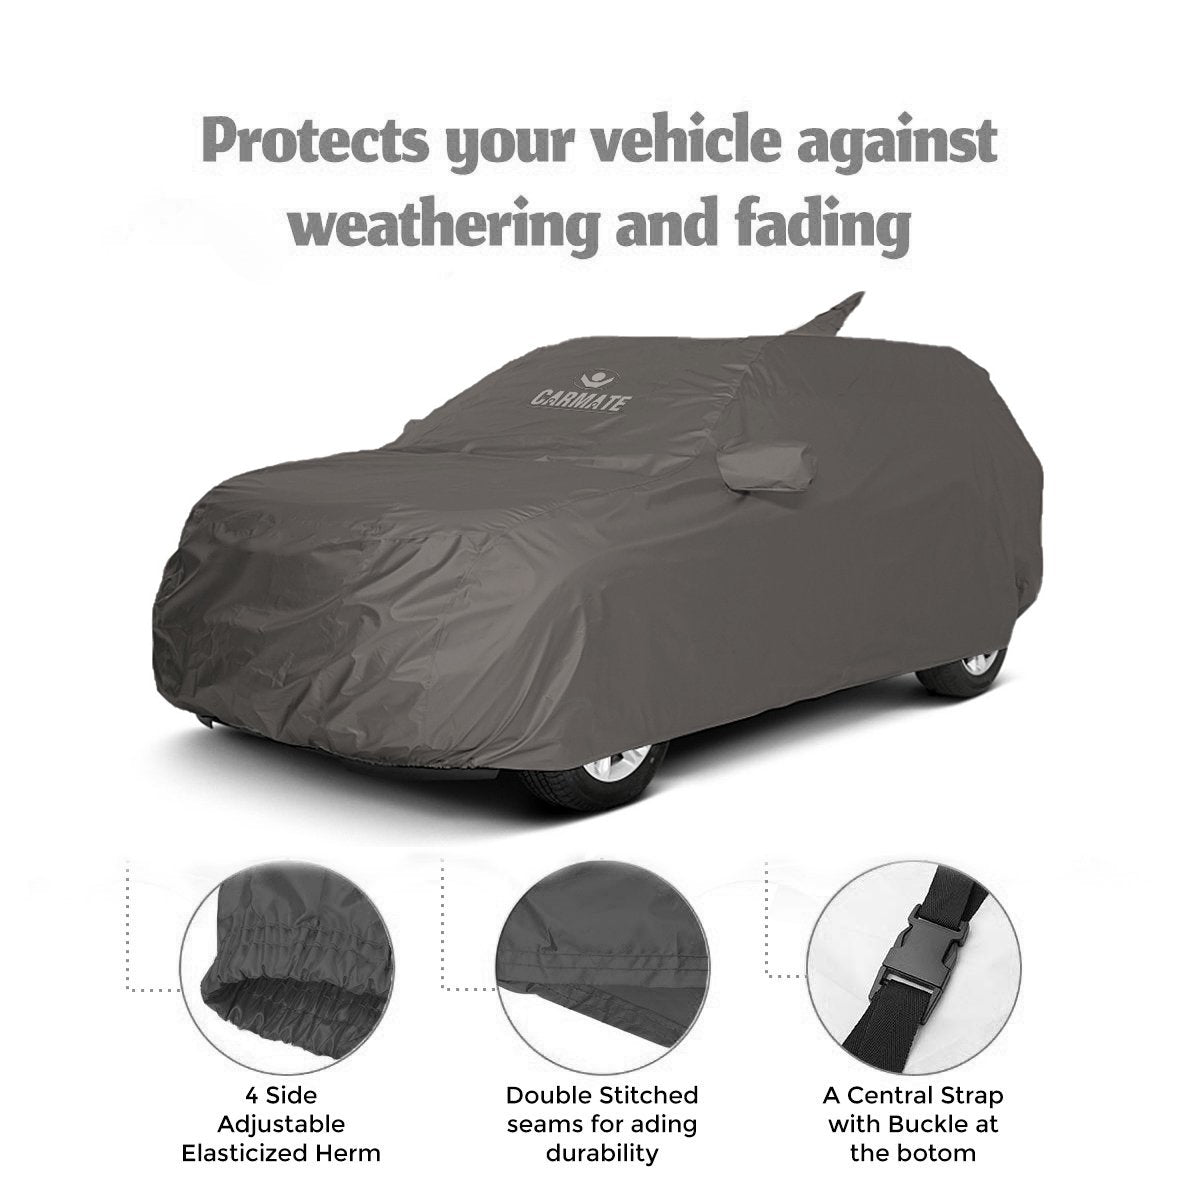 Carmate Car Body Cover 100% Waterproof Pride (Grey) for MG - Hector Plus - CARMATE®